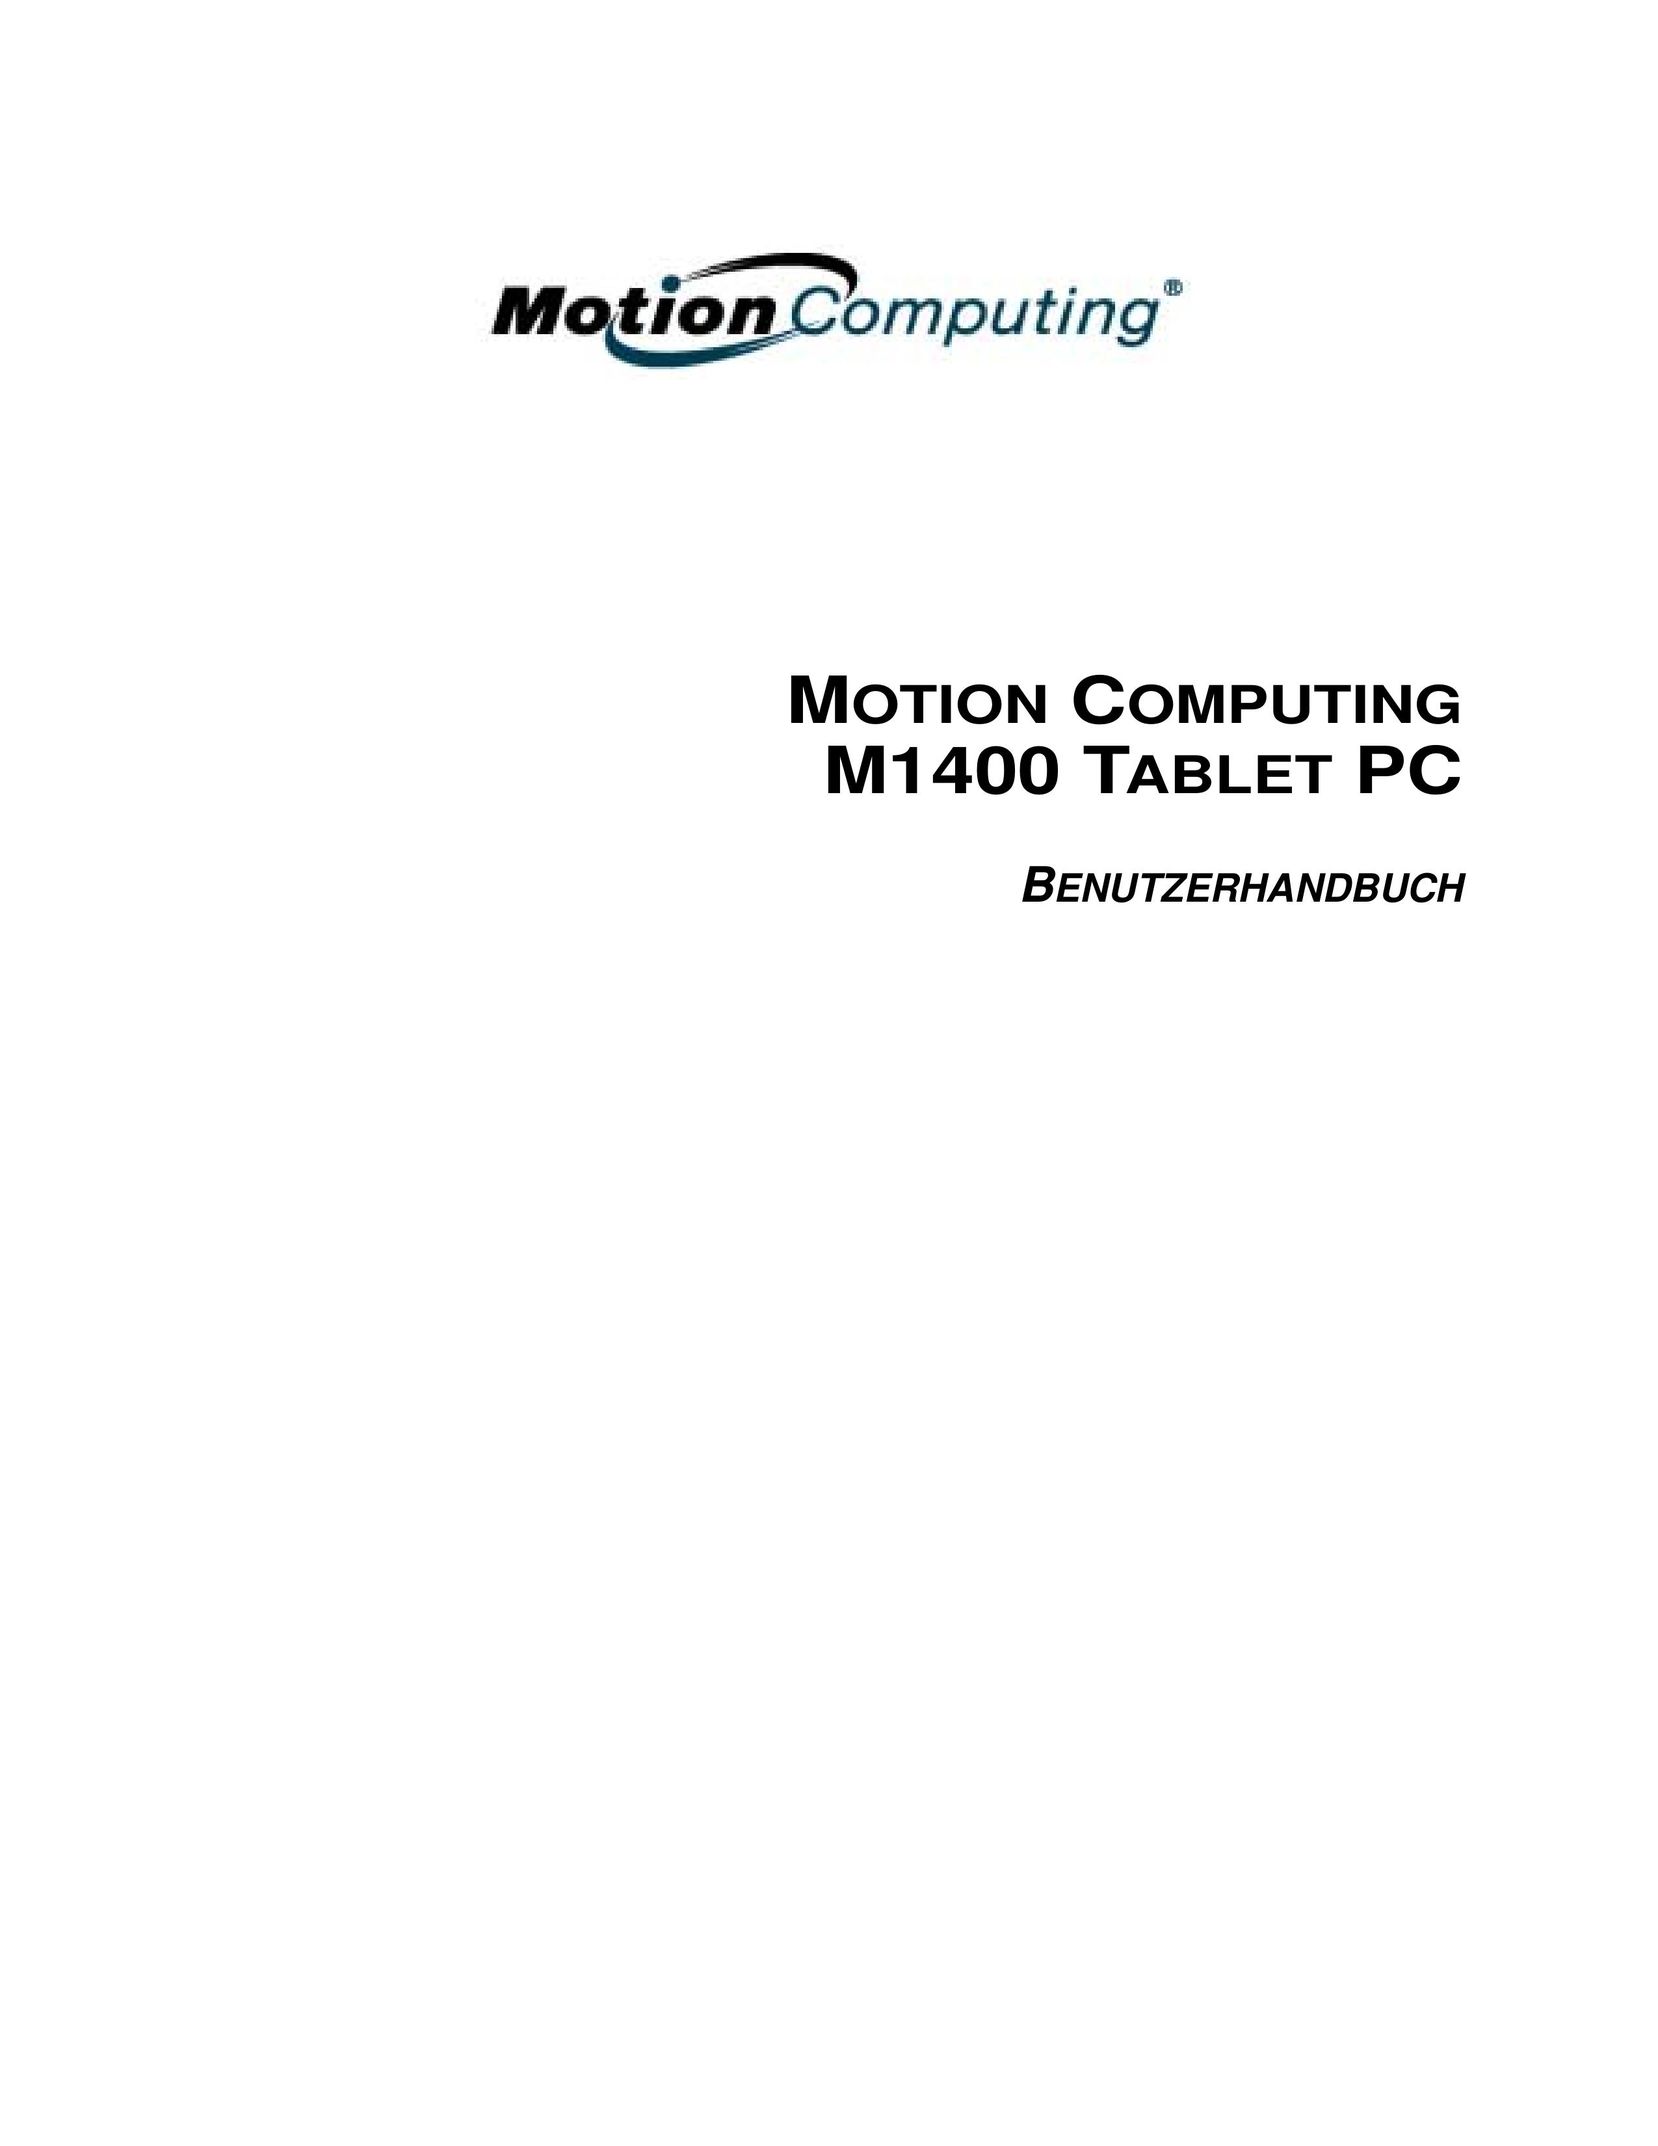 Motion Computing M1400 Graphics Tablet User Manual